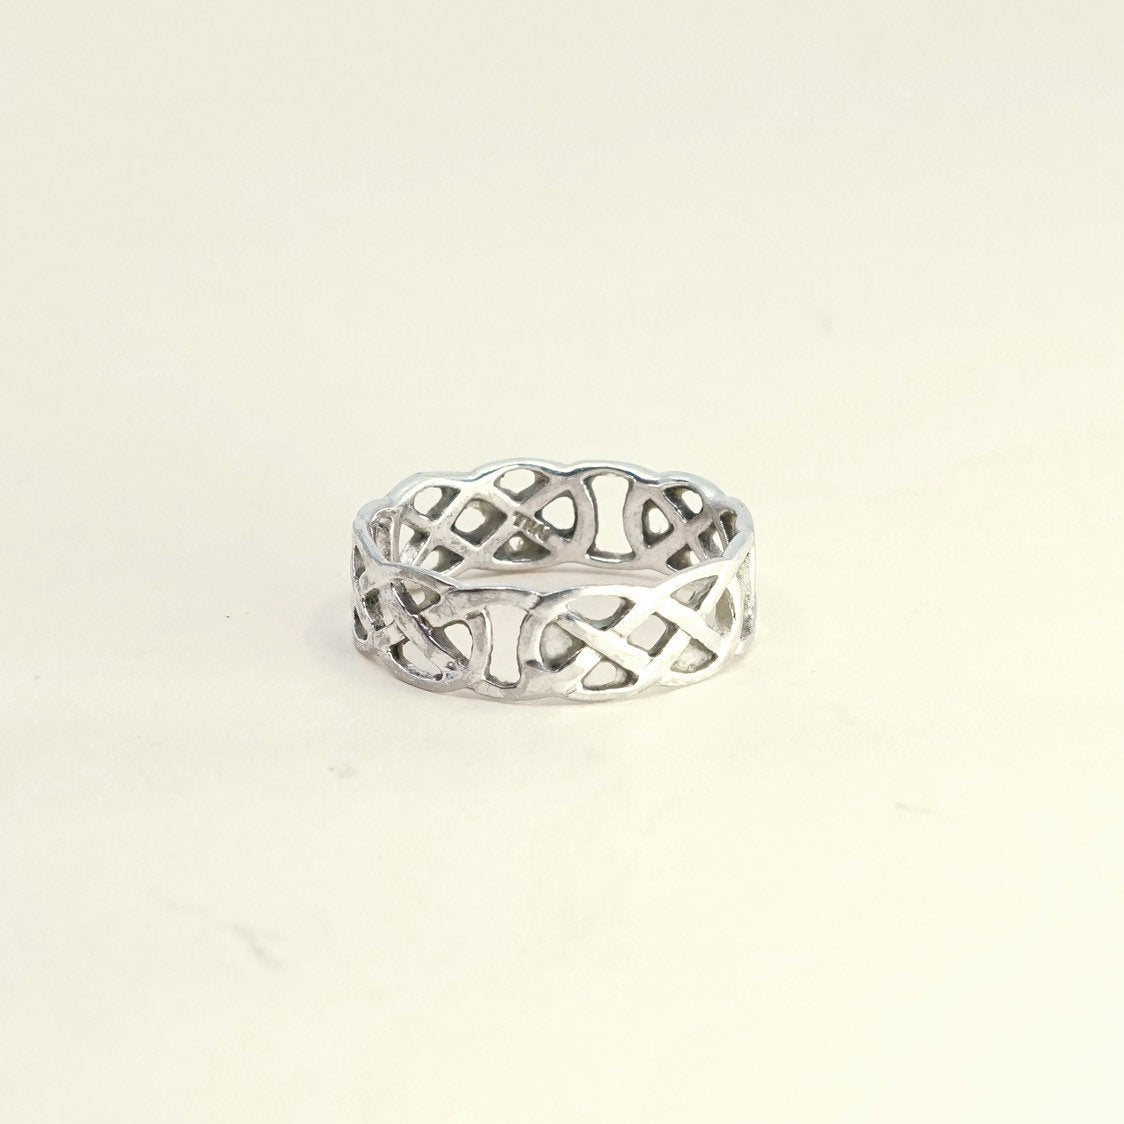 Size 9.75, vtg sterling silver handmade ring, 925 woven band w/ filigree